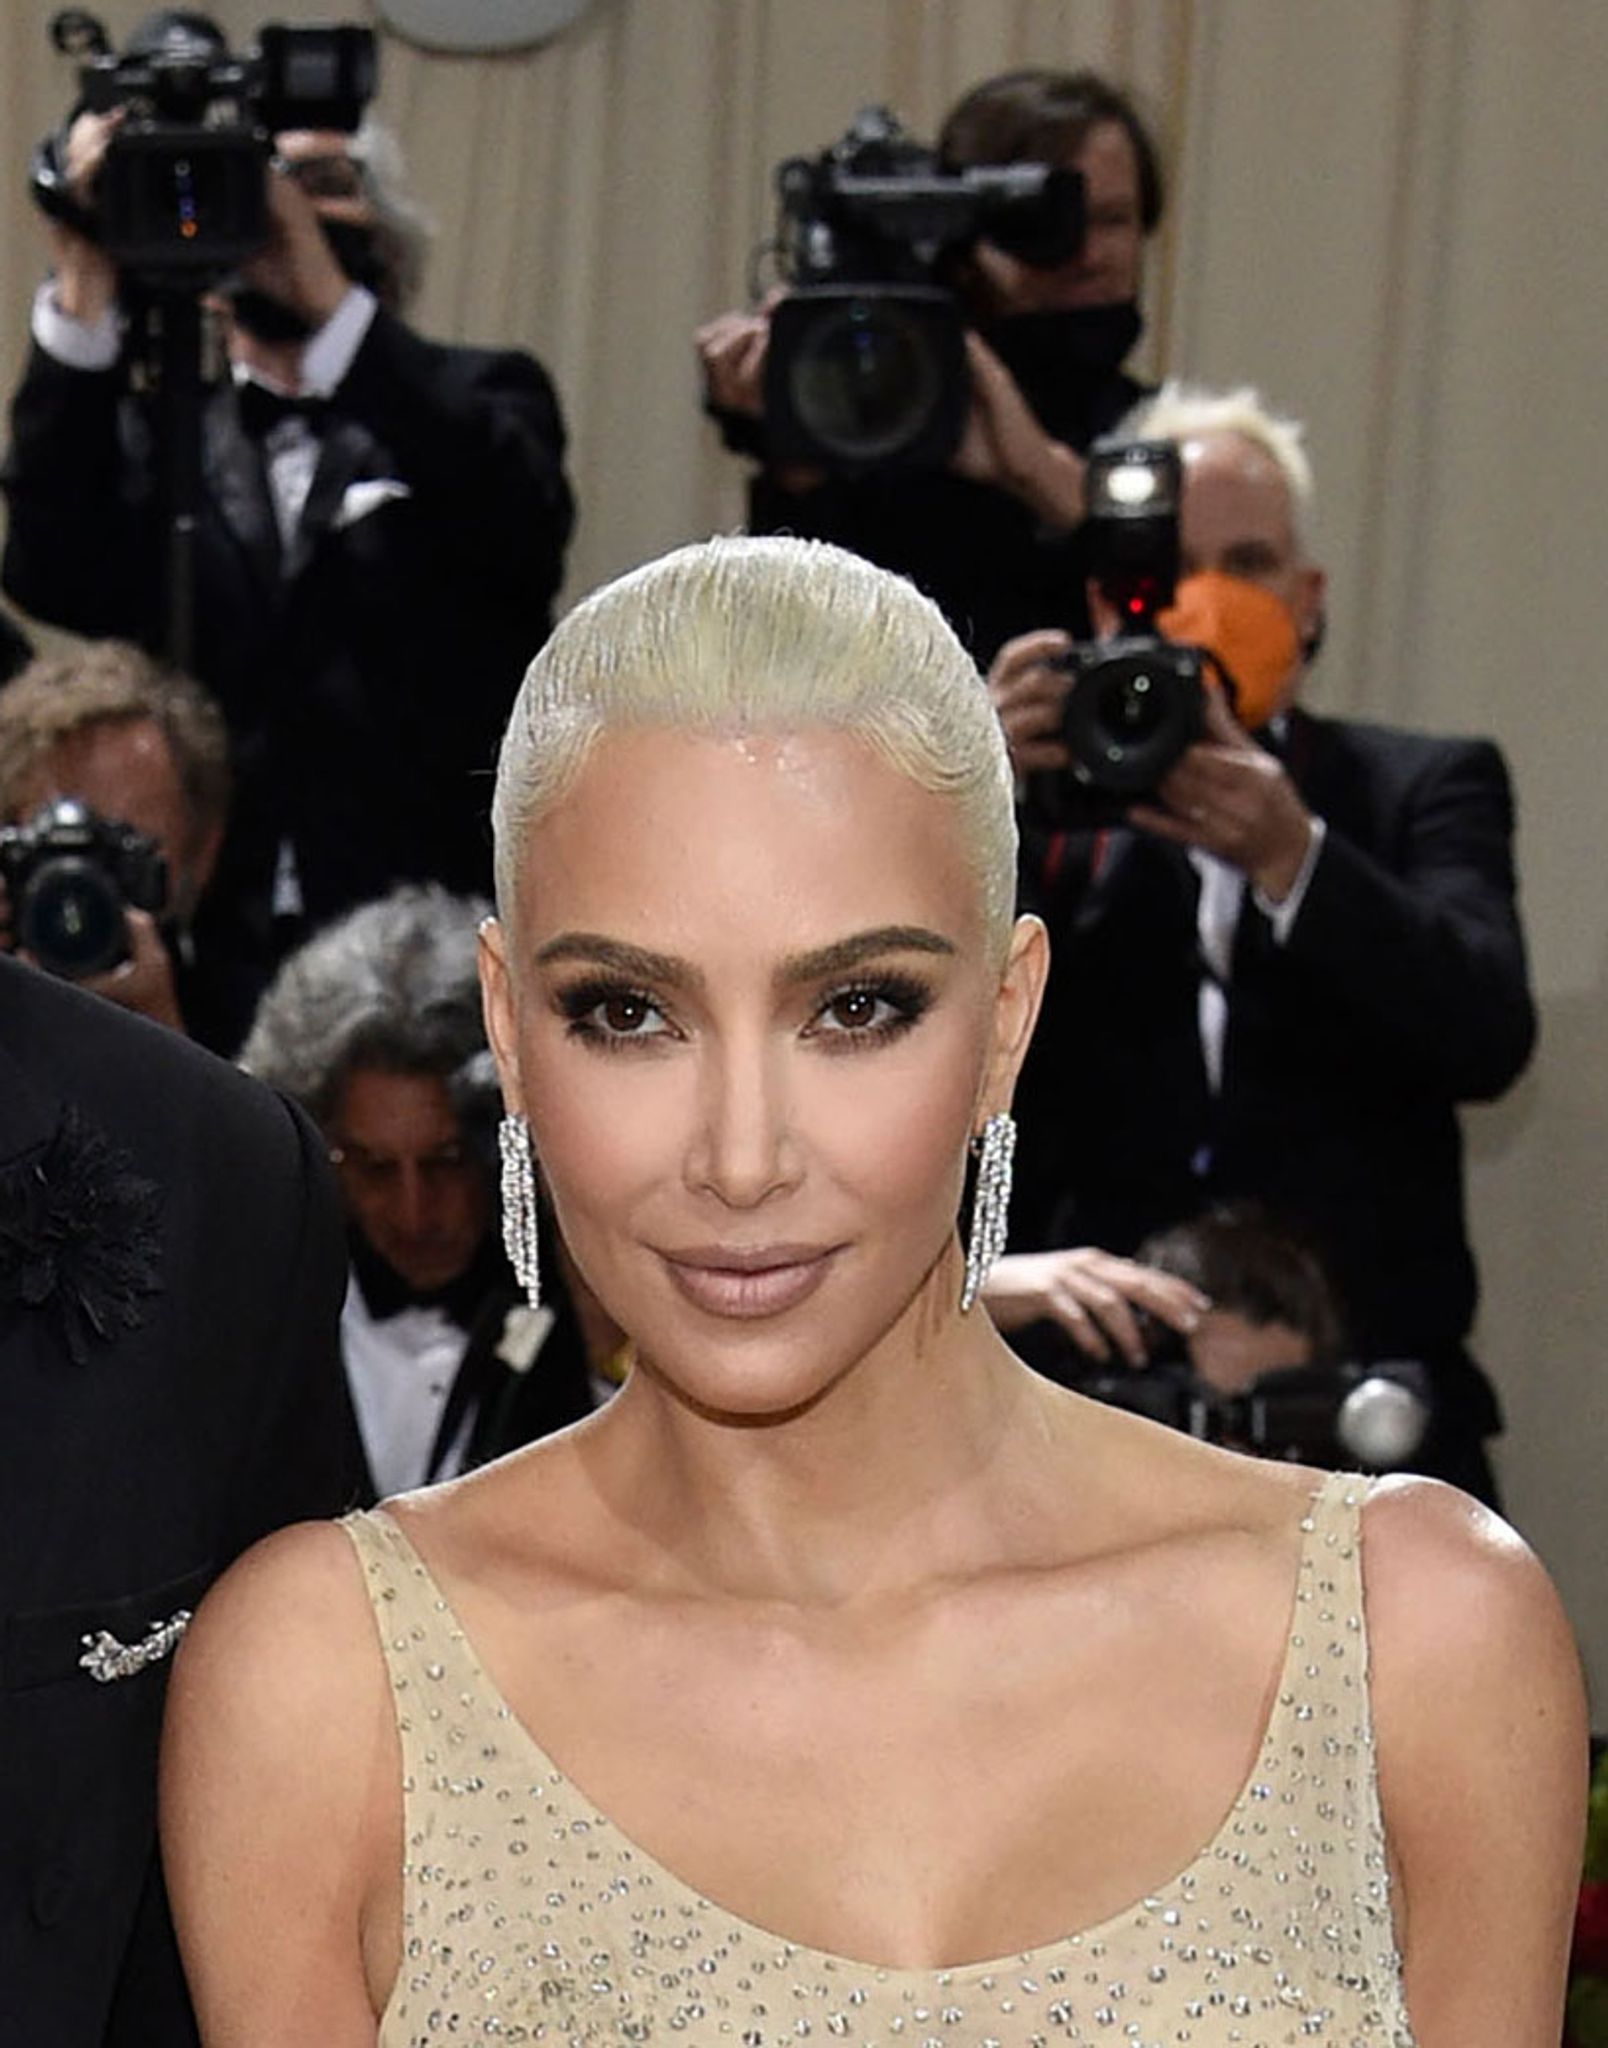 Reality-Star Kim Kardashian ist auch eine Stilikone.